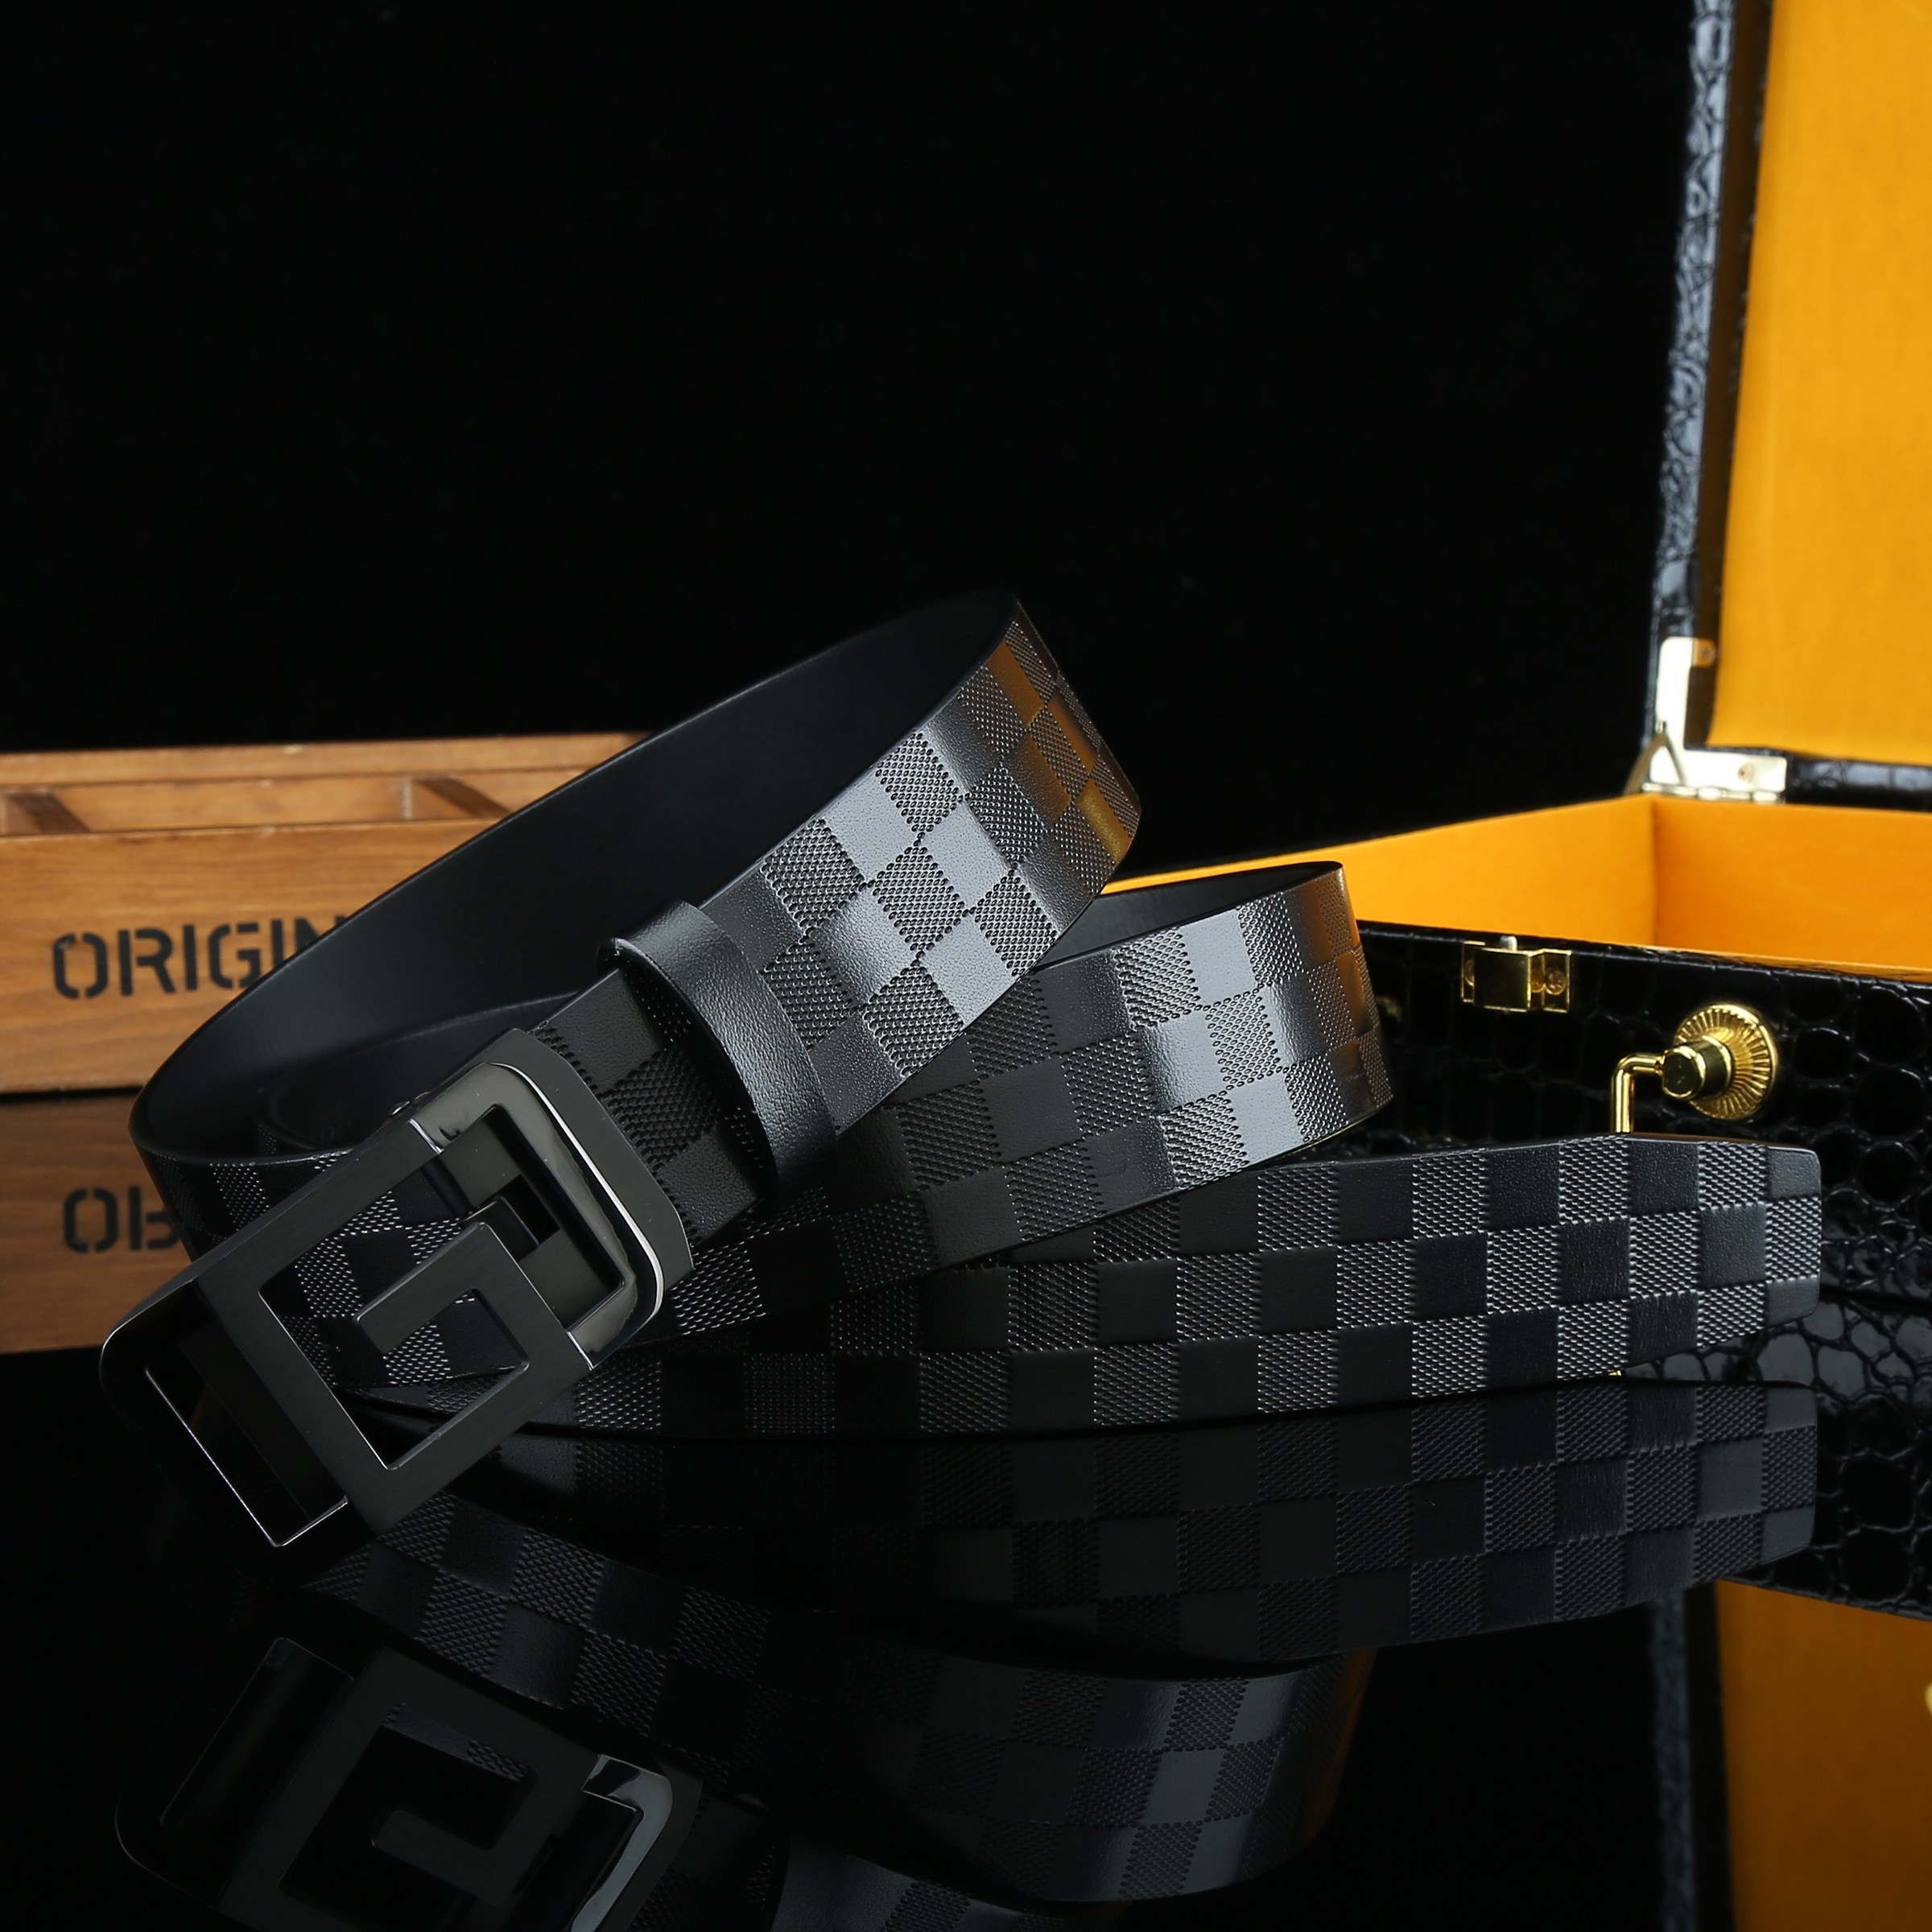 Sizing your belt. ##LouisVuittonBelt##BeltSize##DesignerBelt